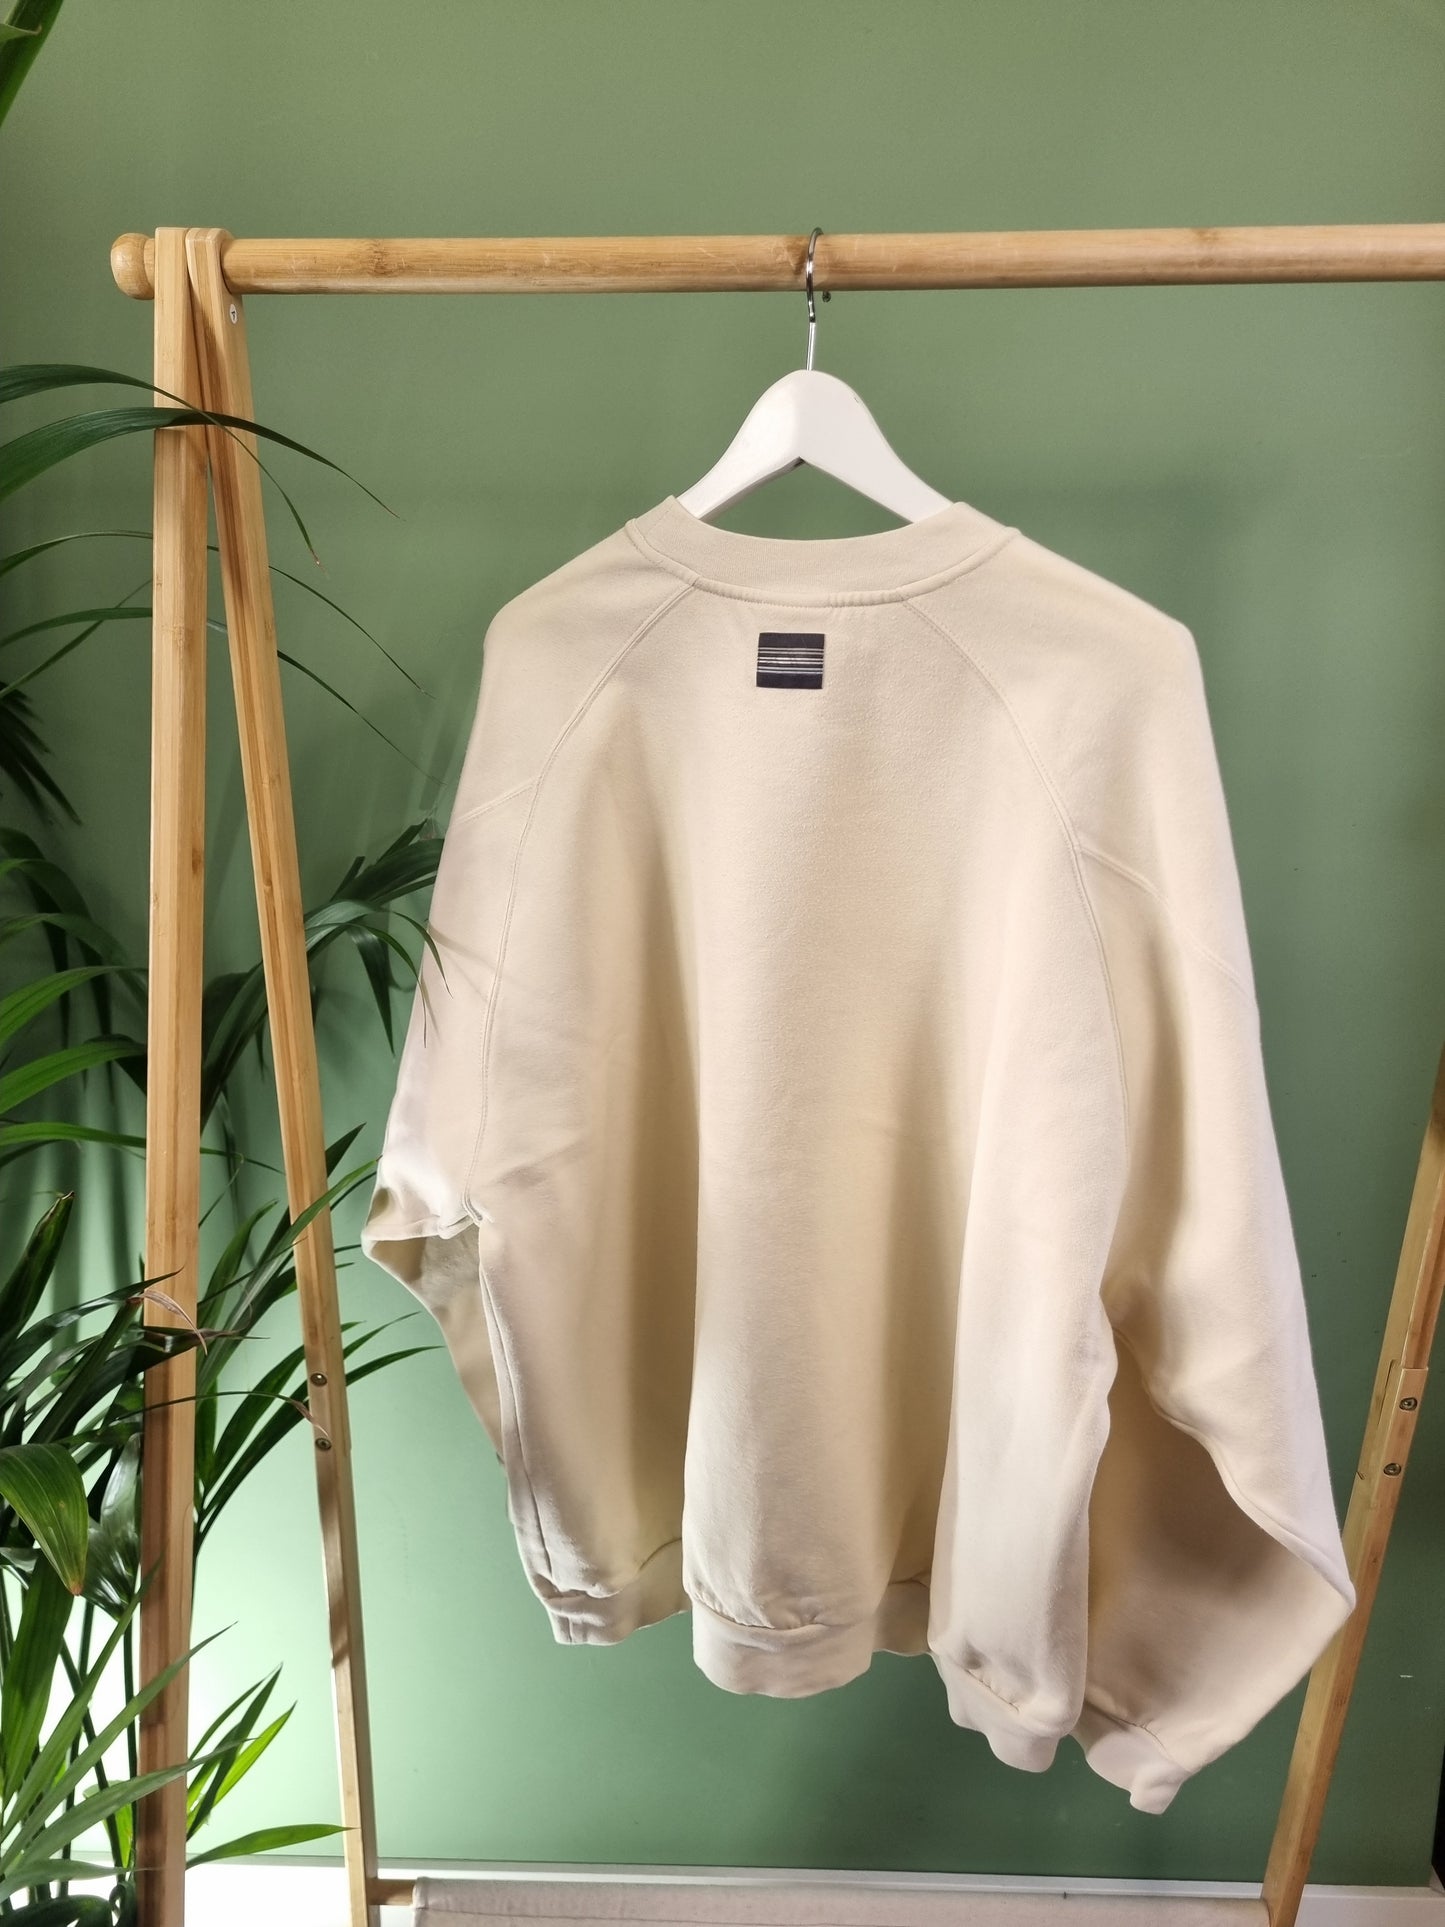 Adidas 90s chest logo sweater maat XL